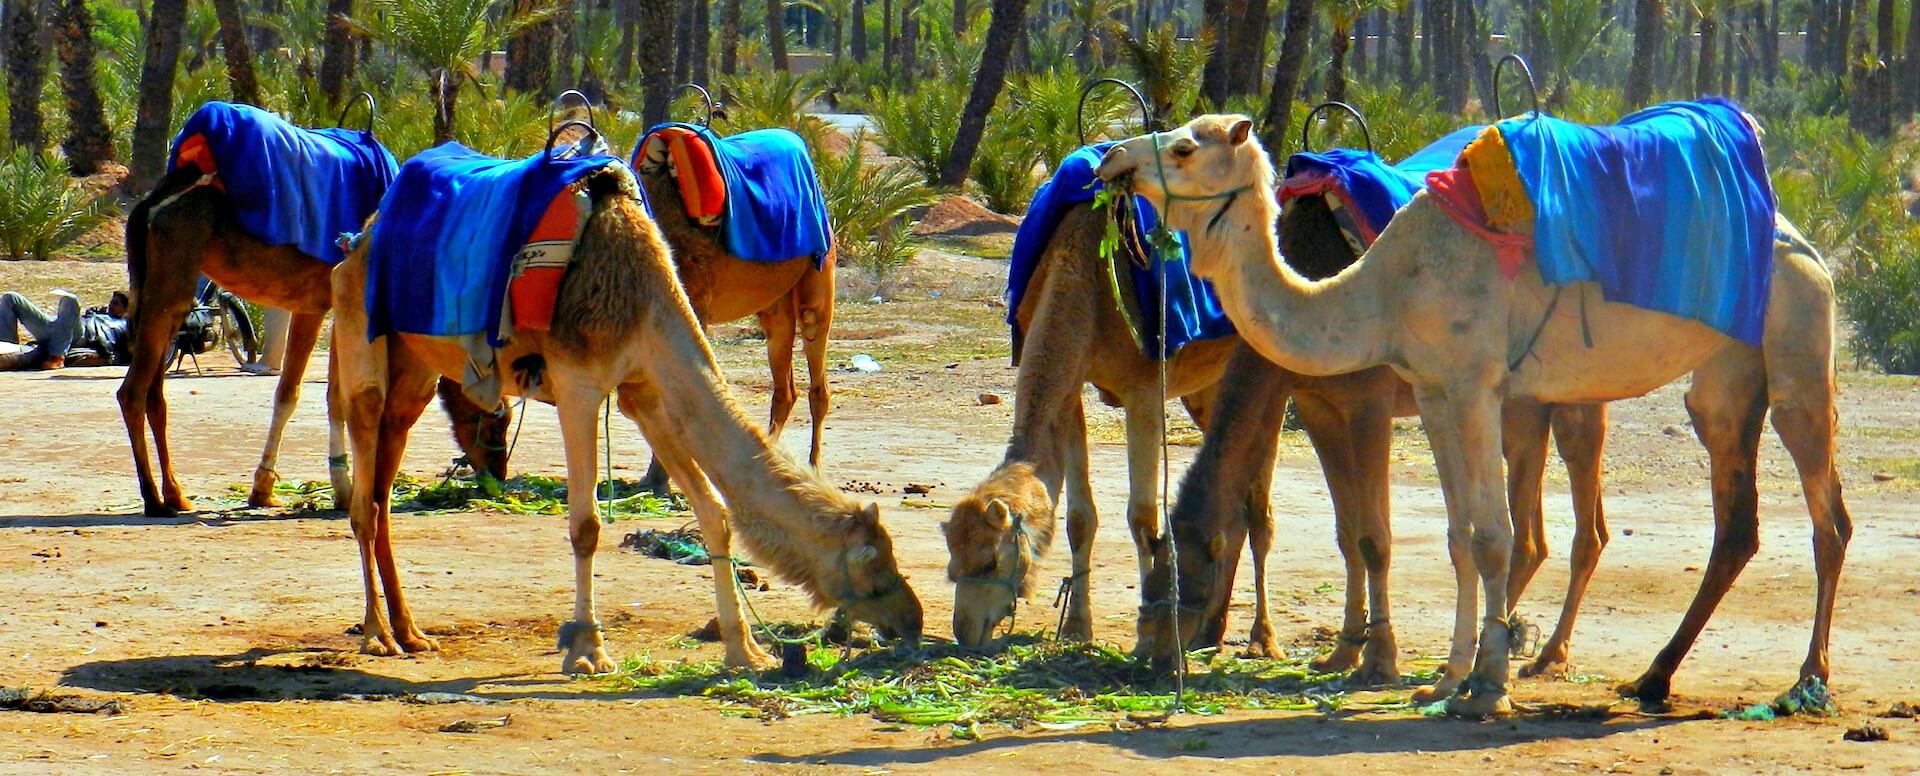 Get close to camels - Marrakech